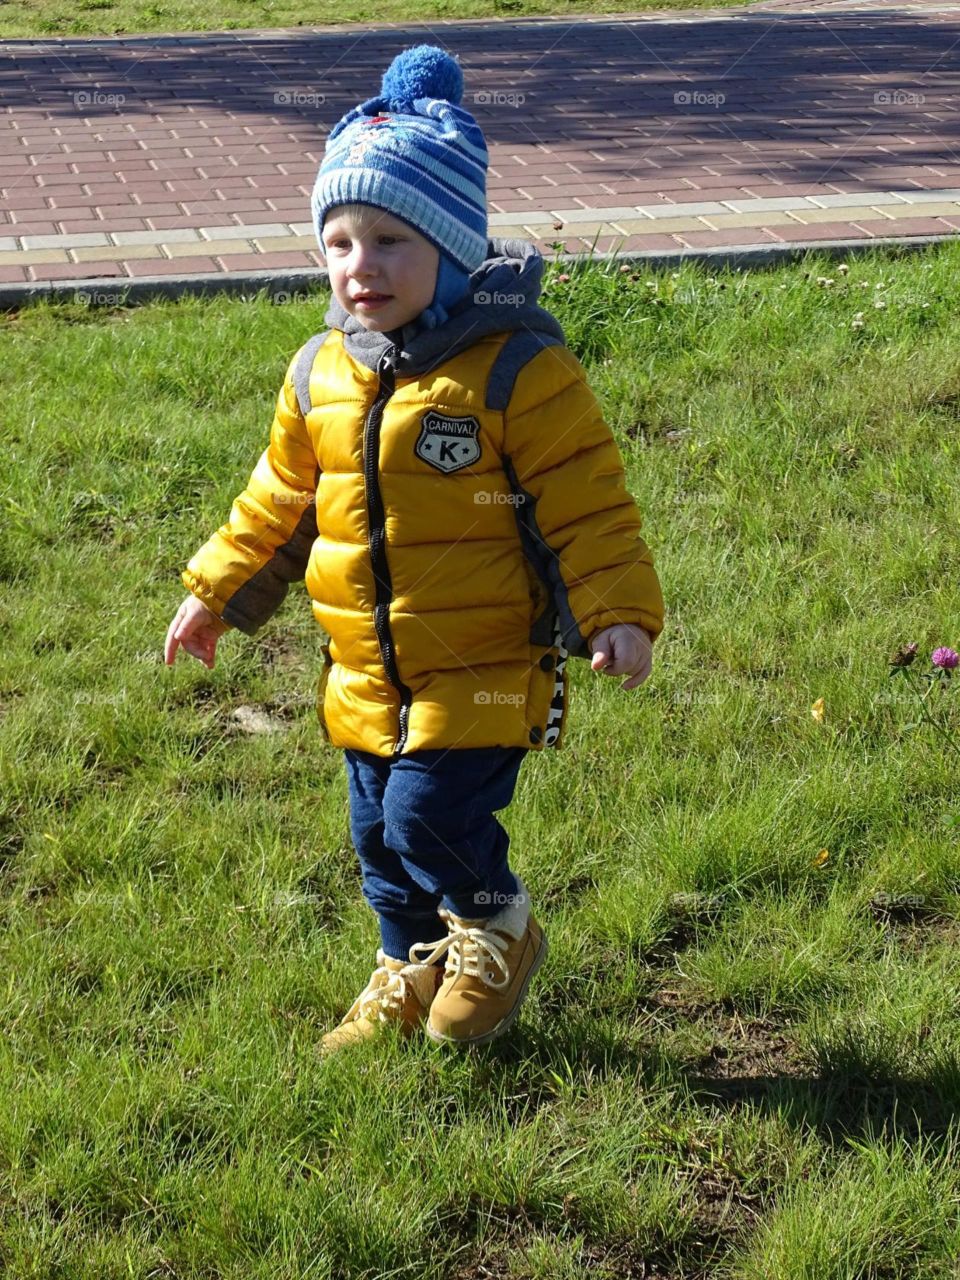 A child walks the walk day happiness joy nature outdoors run shoes boy grass green pavement autumn